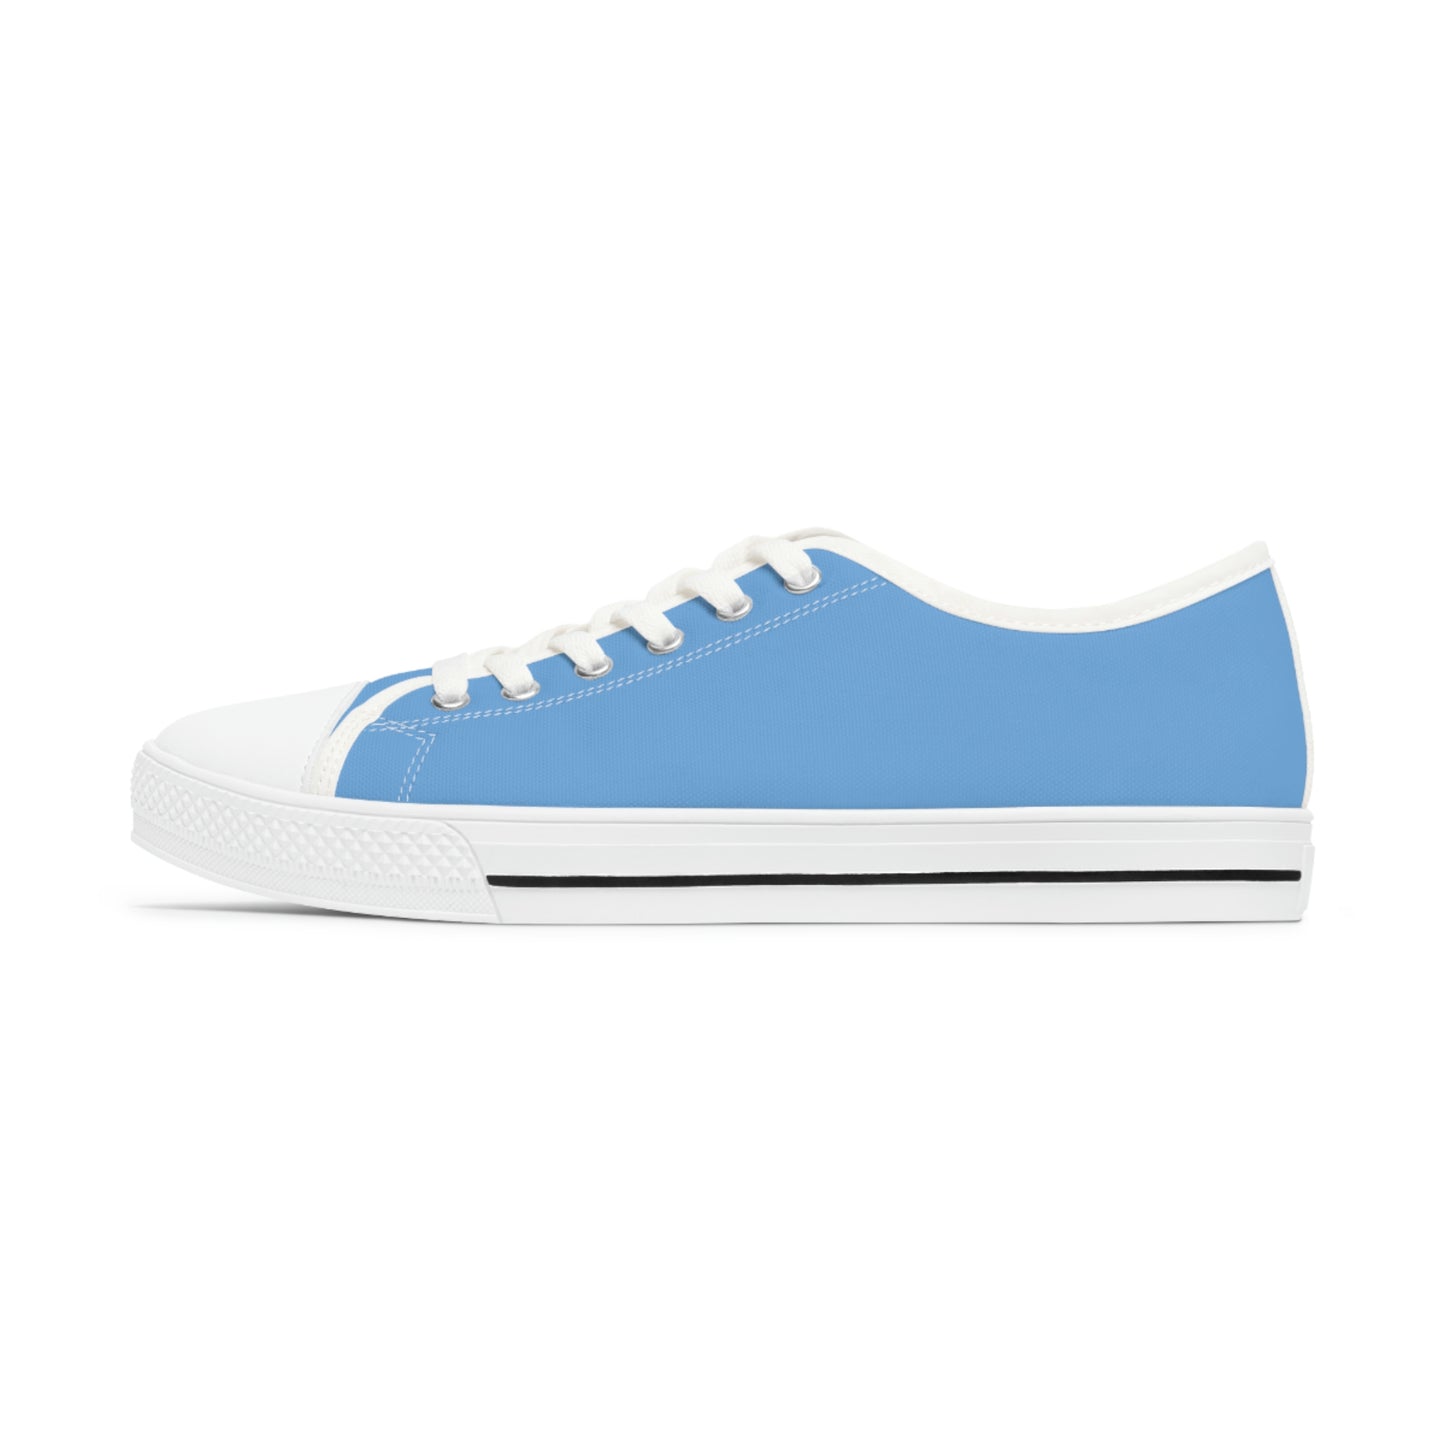 Women's Blue Low Top Sneakers